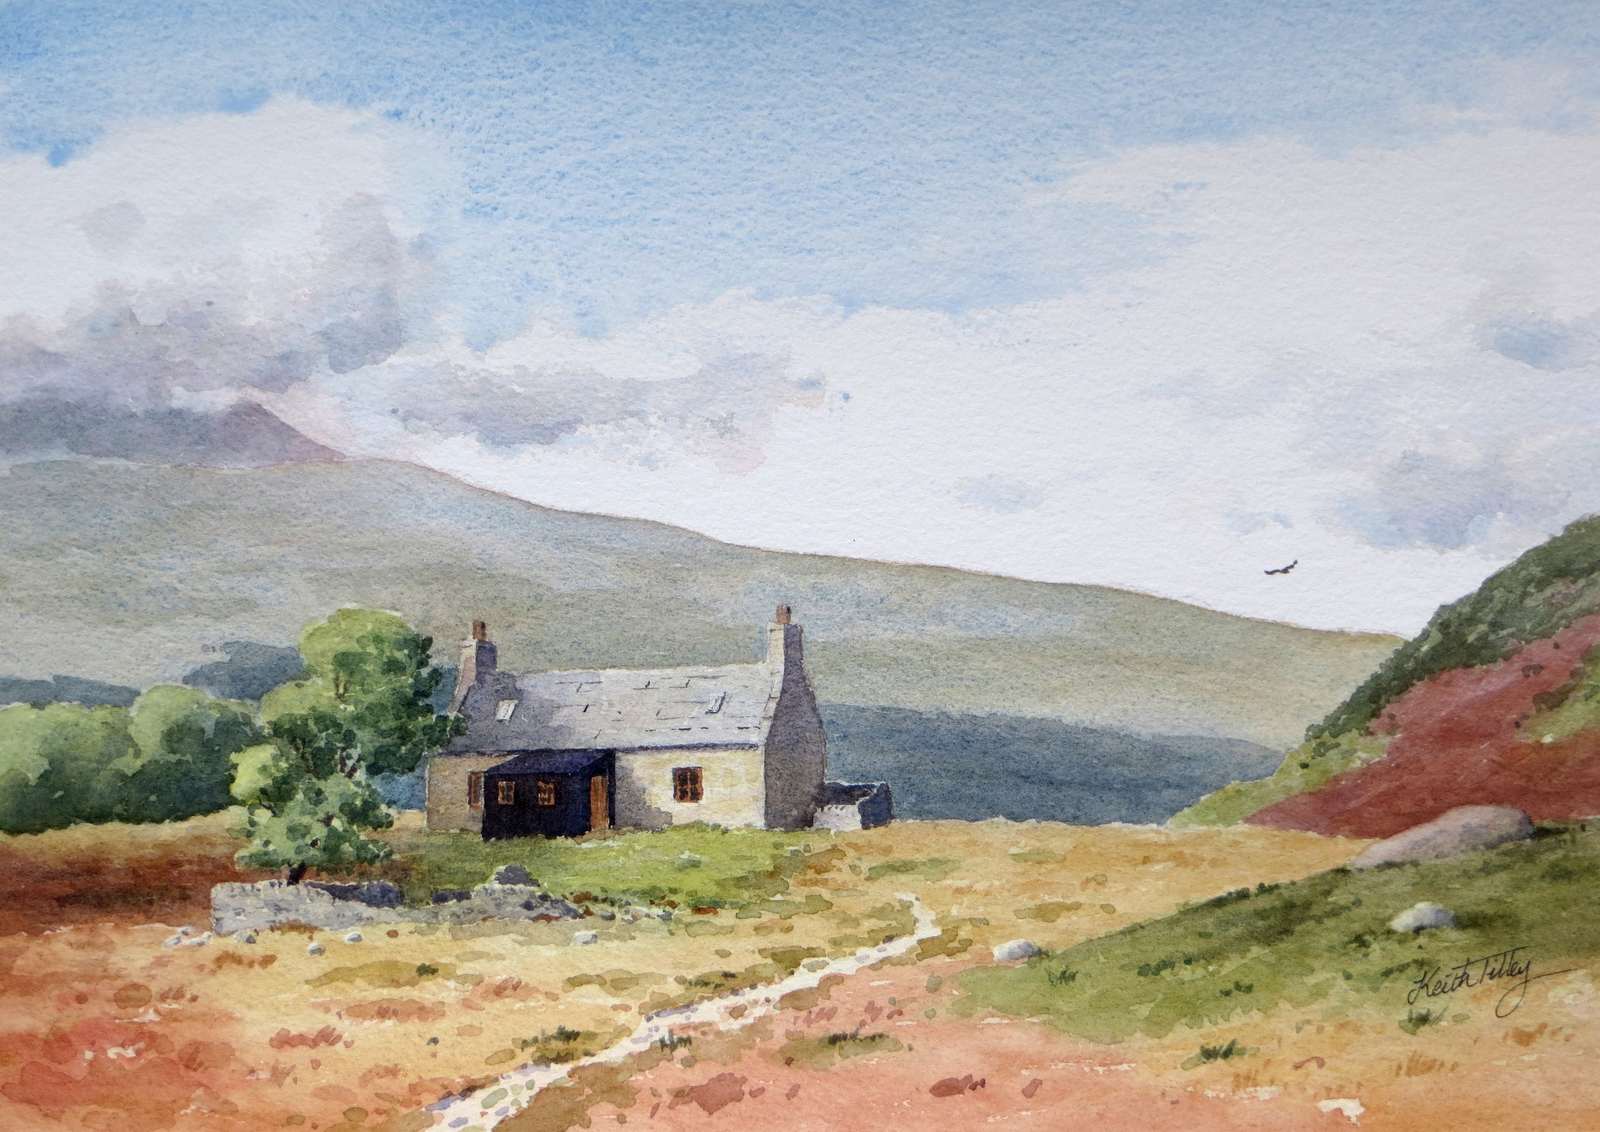 Strabeg Bothy, a mountain refuge in Sutherland, Scotland. Original watercolour.